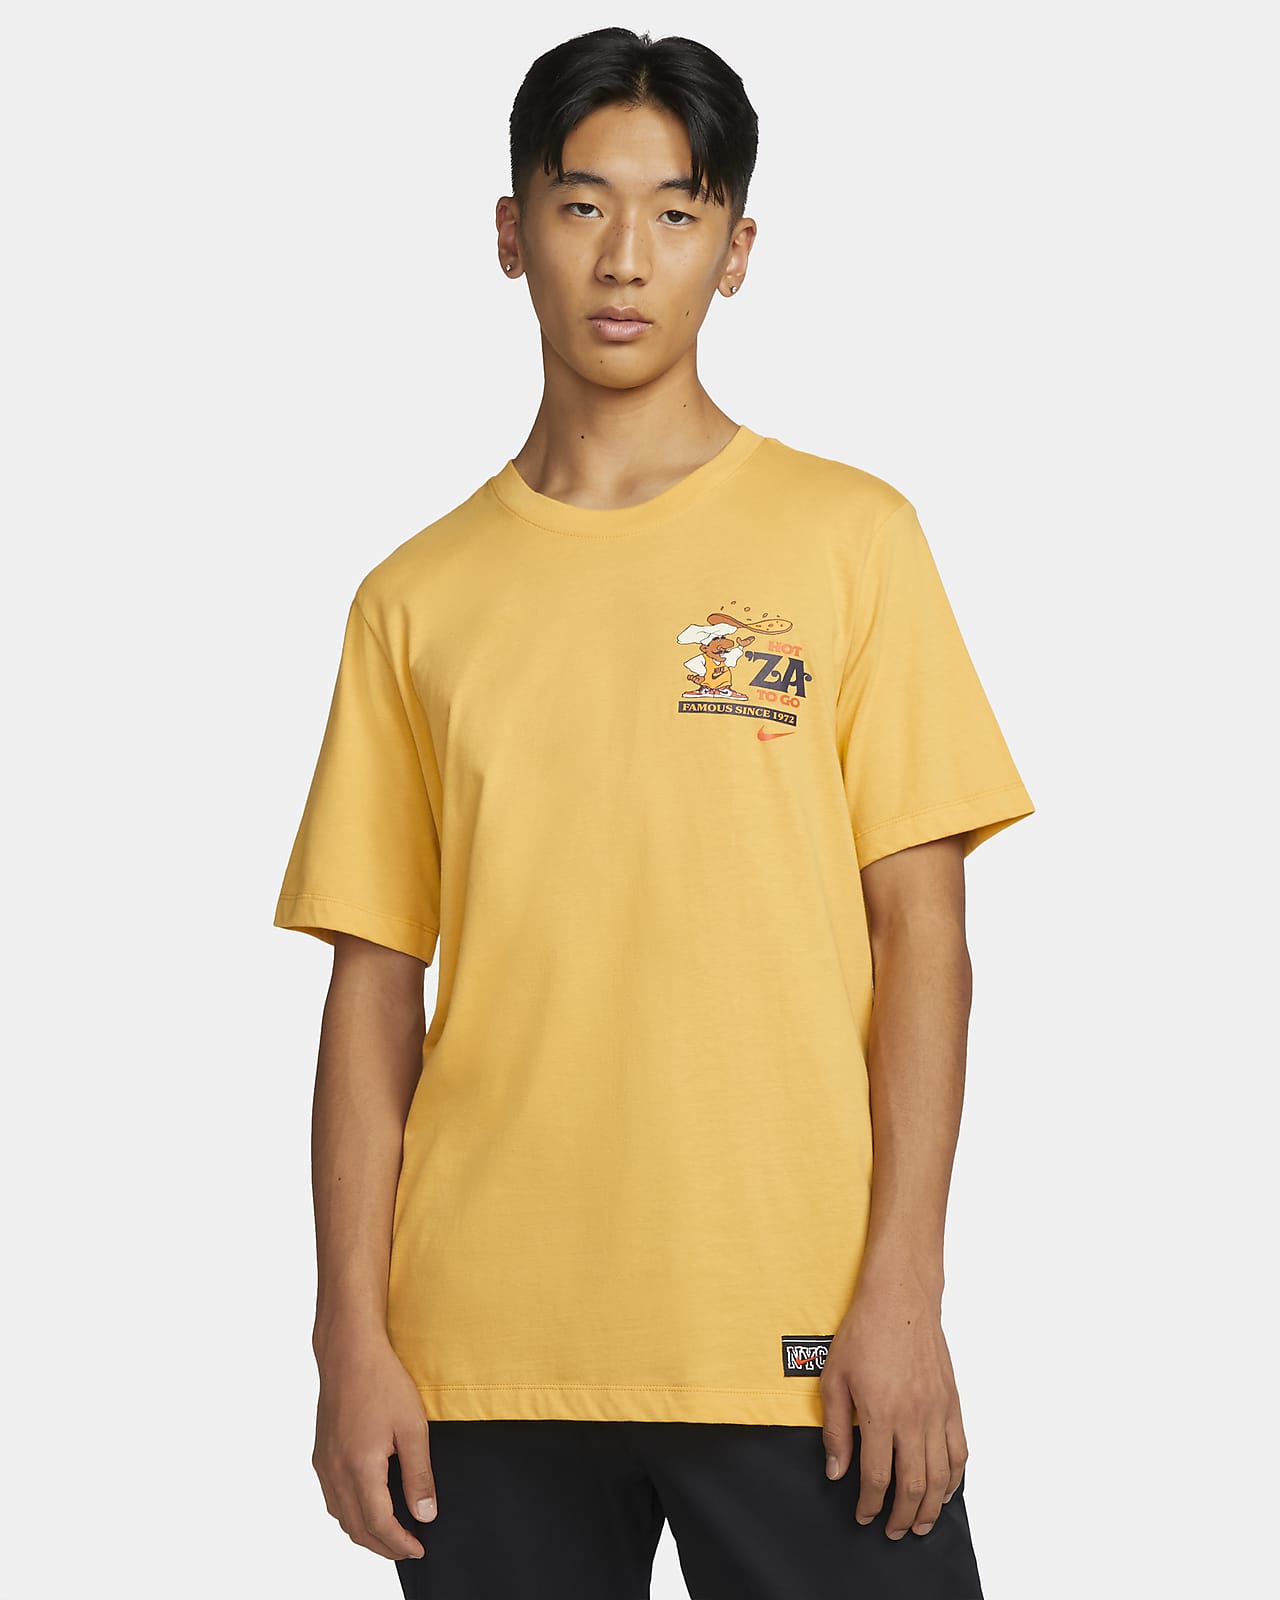 Nike Sportswear NYC Men's T-Shirt